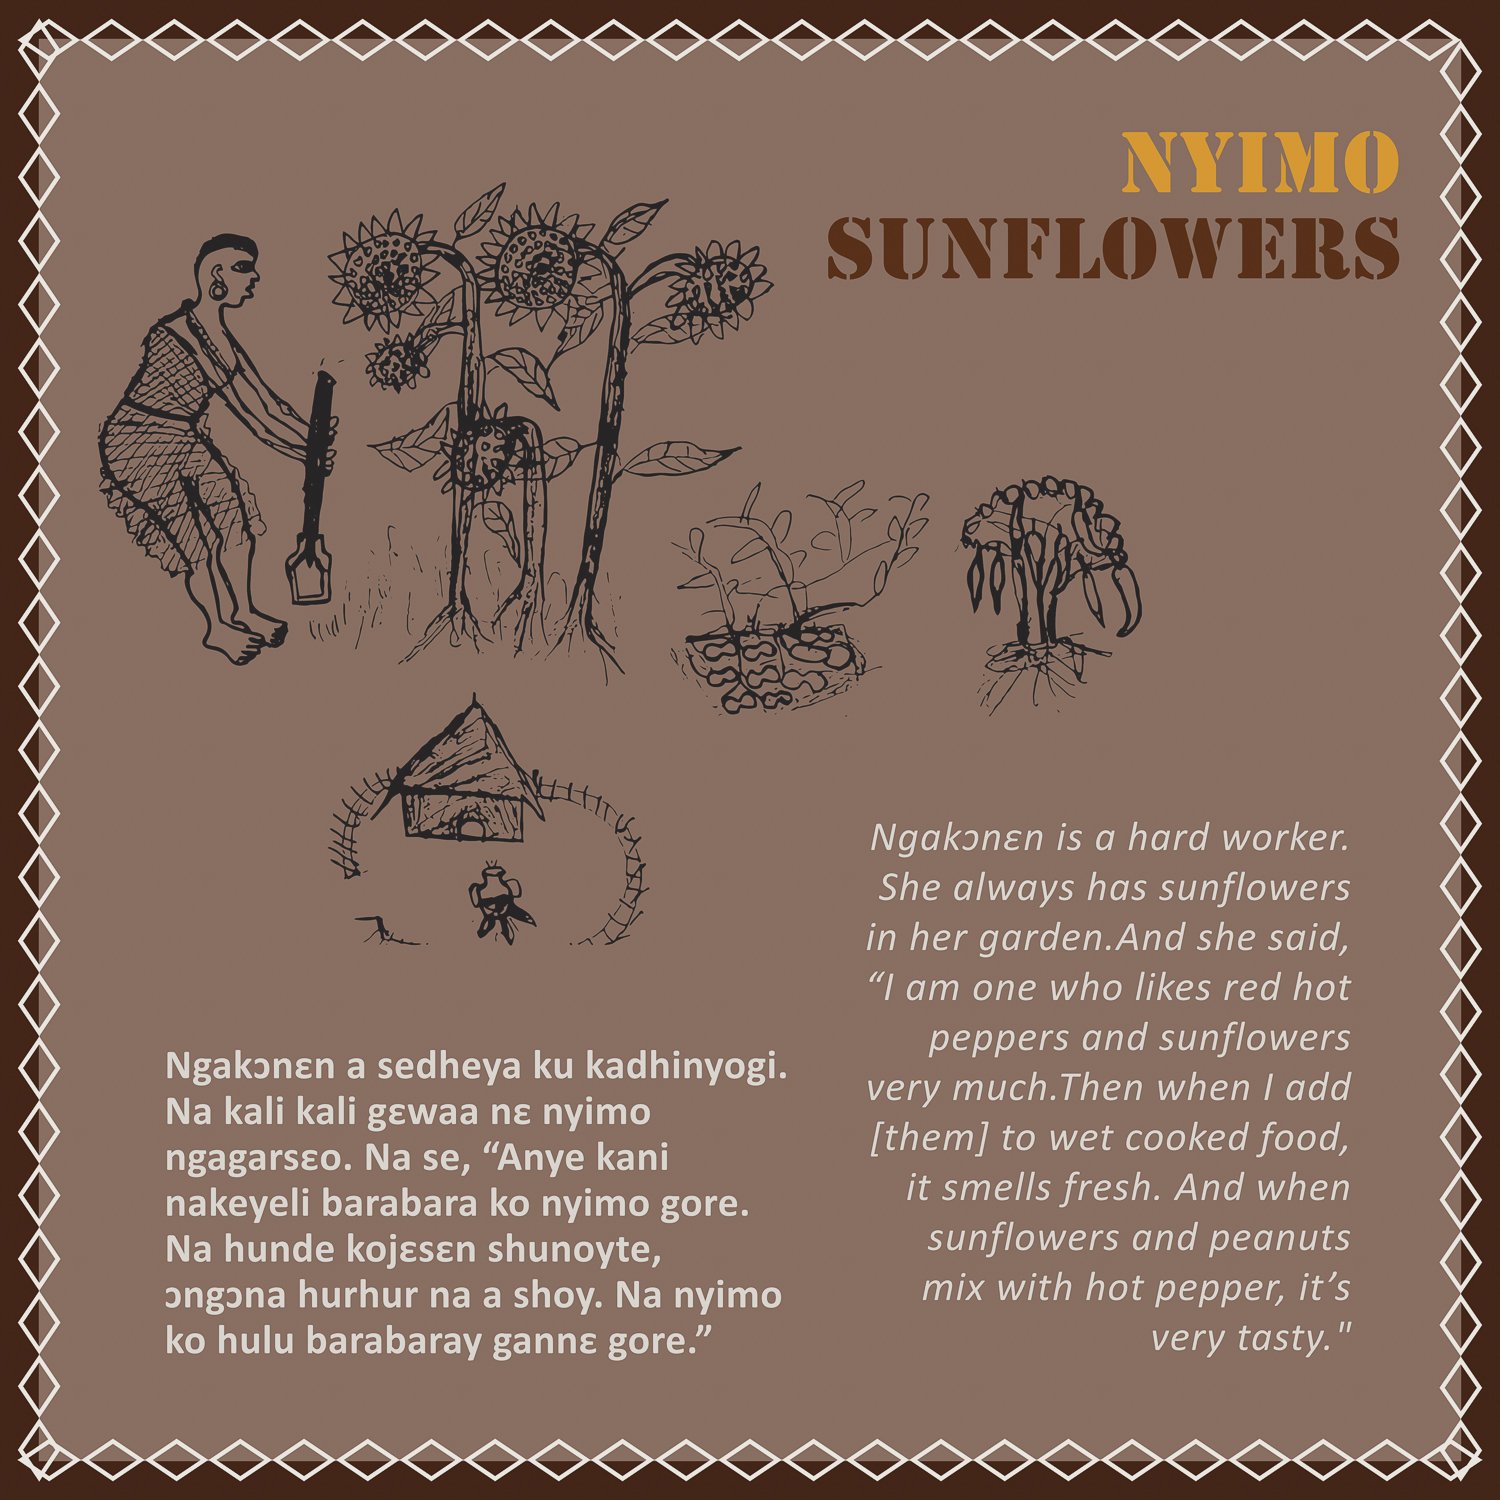 nyimo = sunflowers